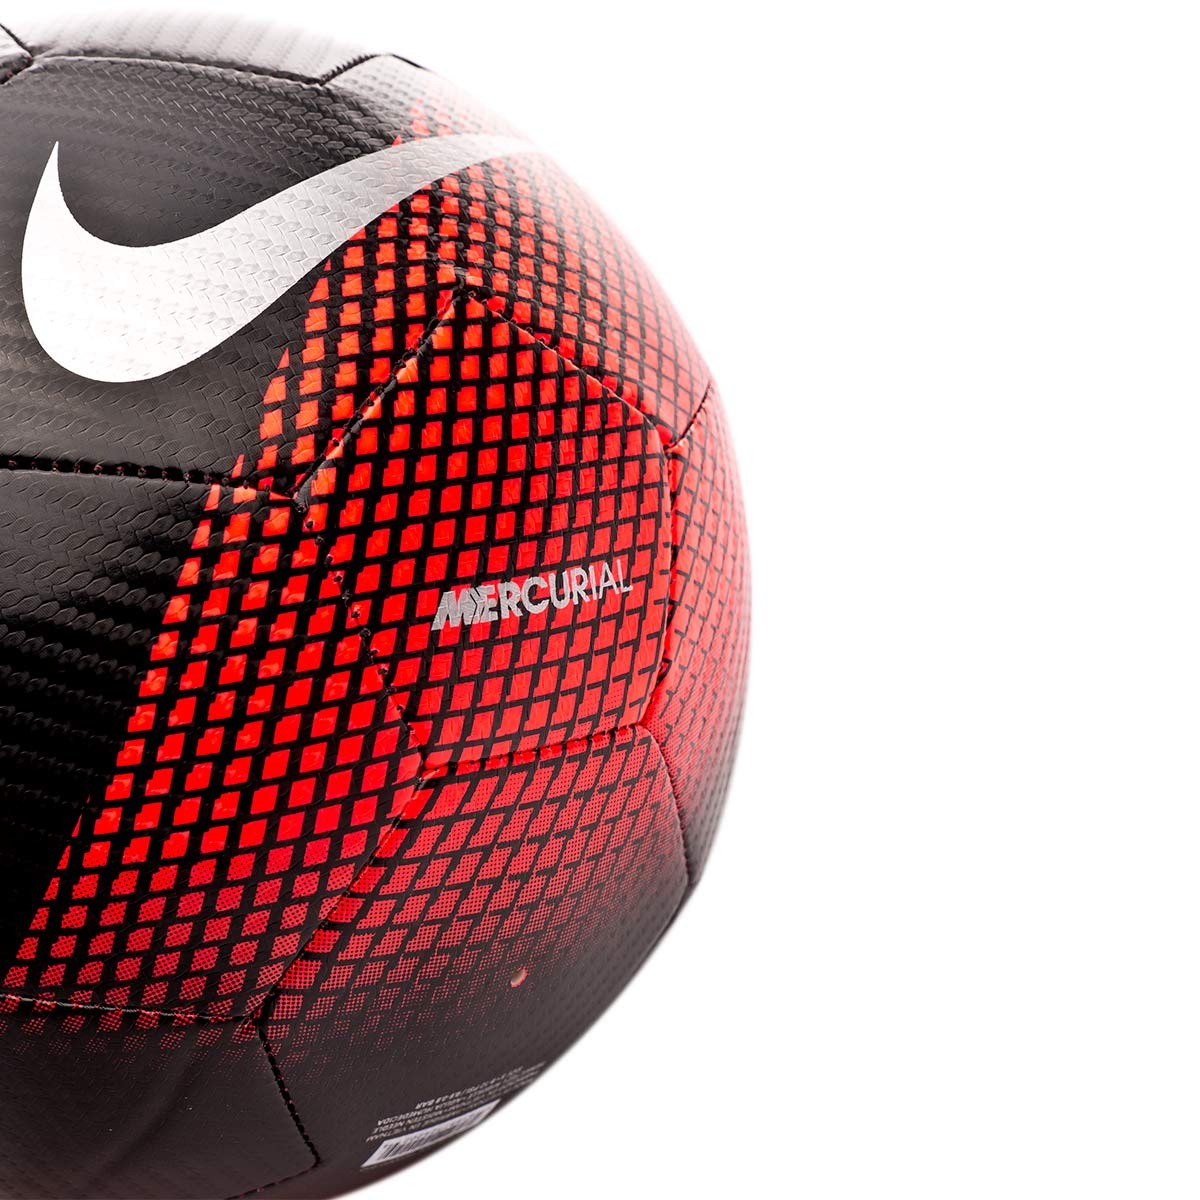 Nike Mercurial Cr7 Football Boots Uk 6.5 eBay